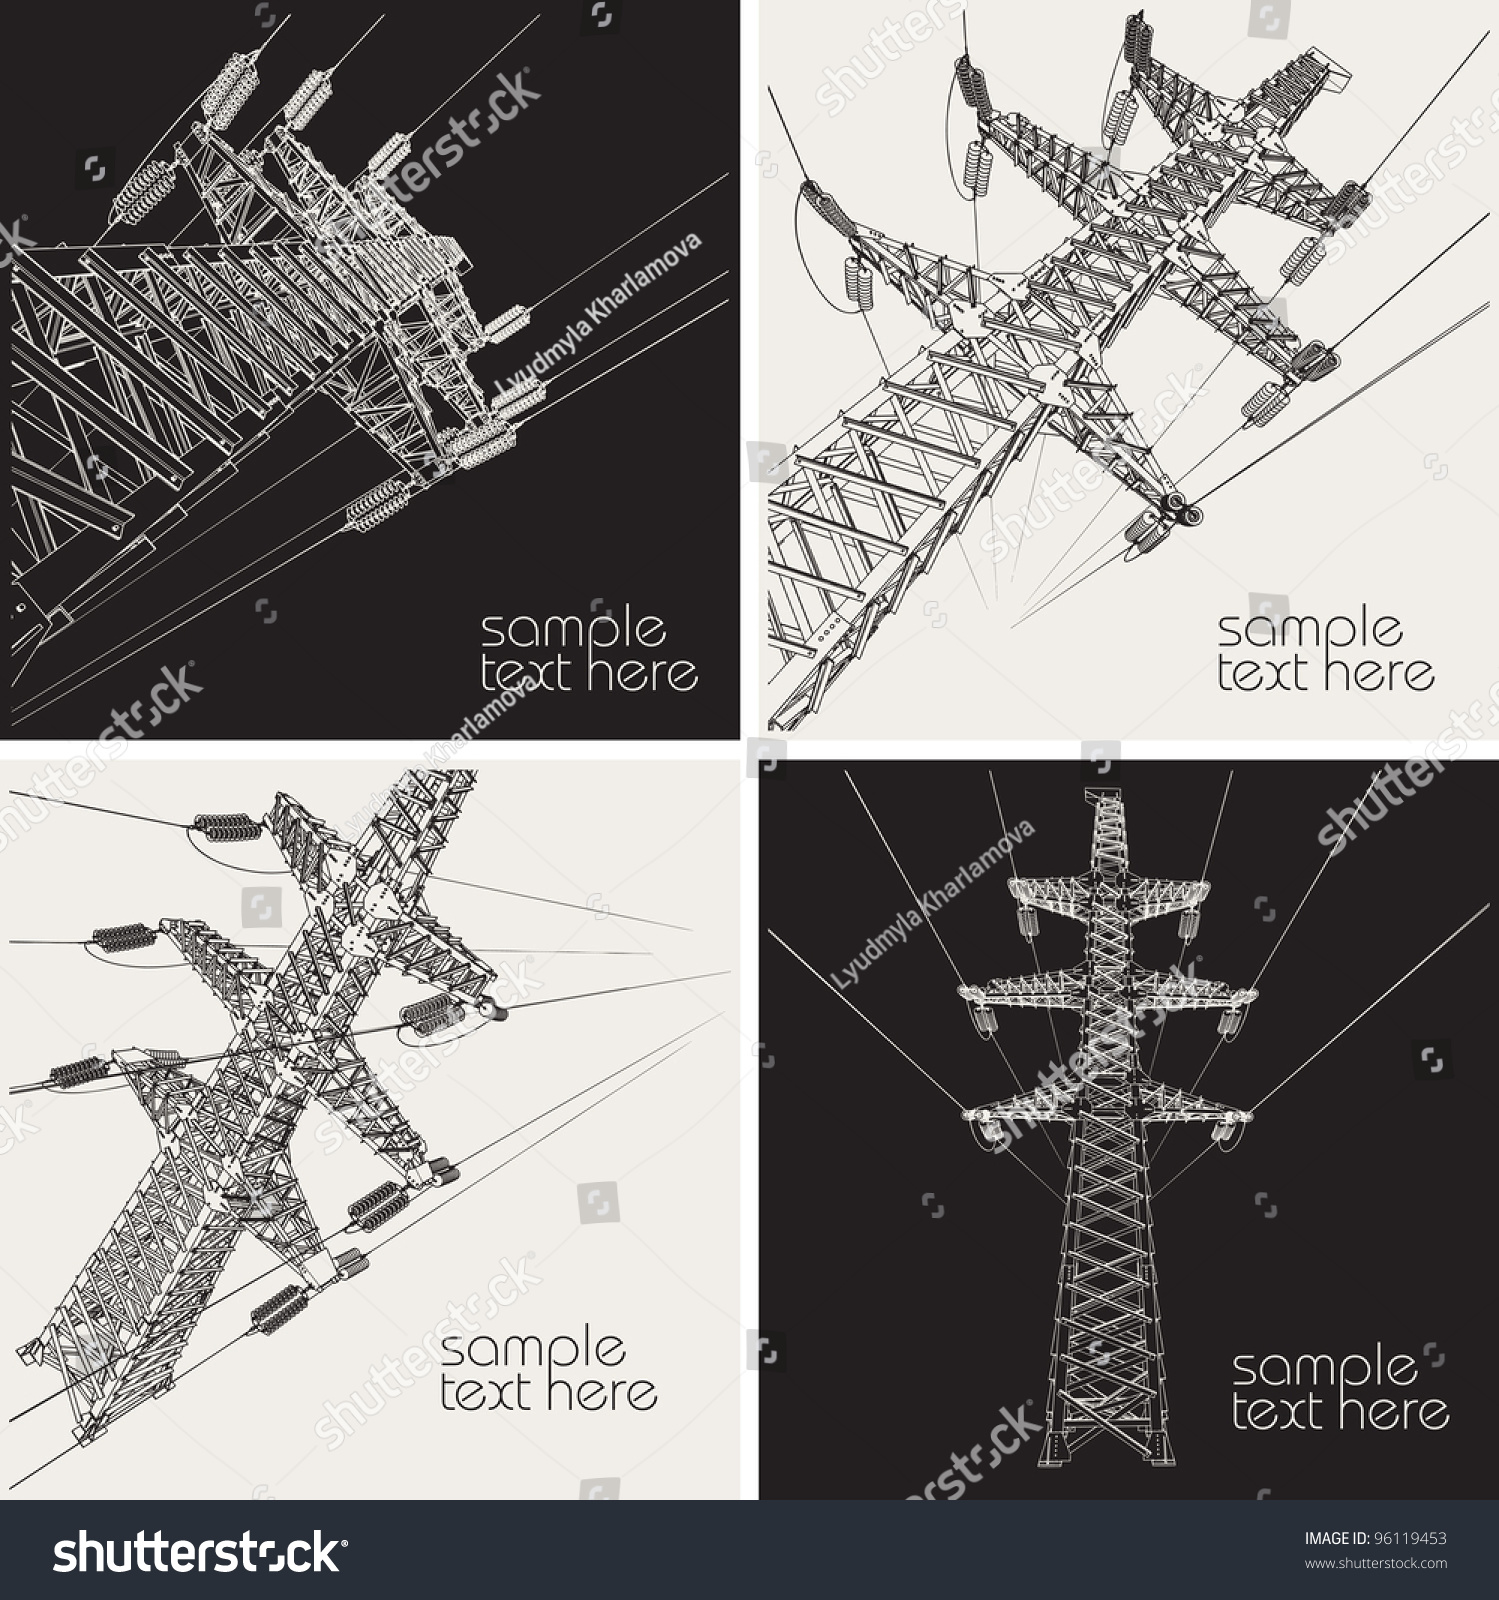 Power Transmission Line, Vector Illustration - 96119453 : Shutterstock